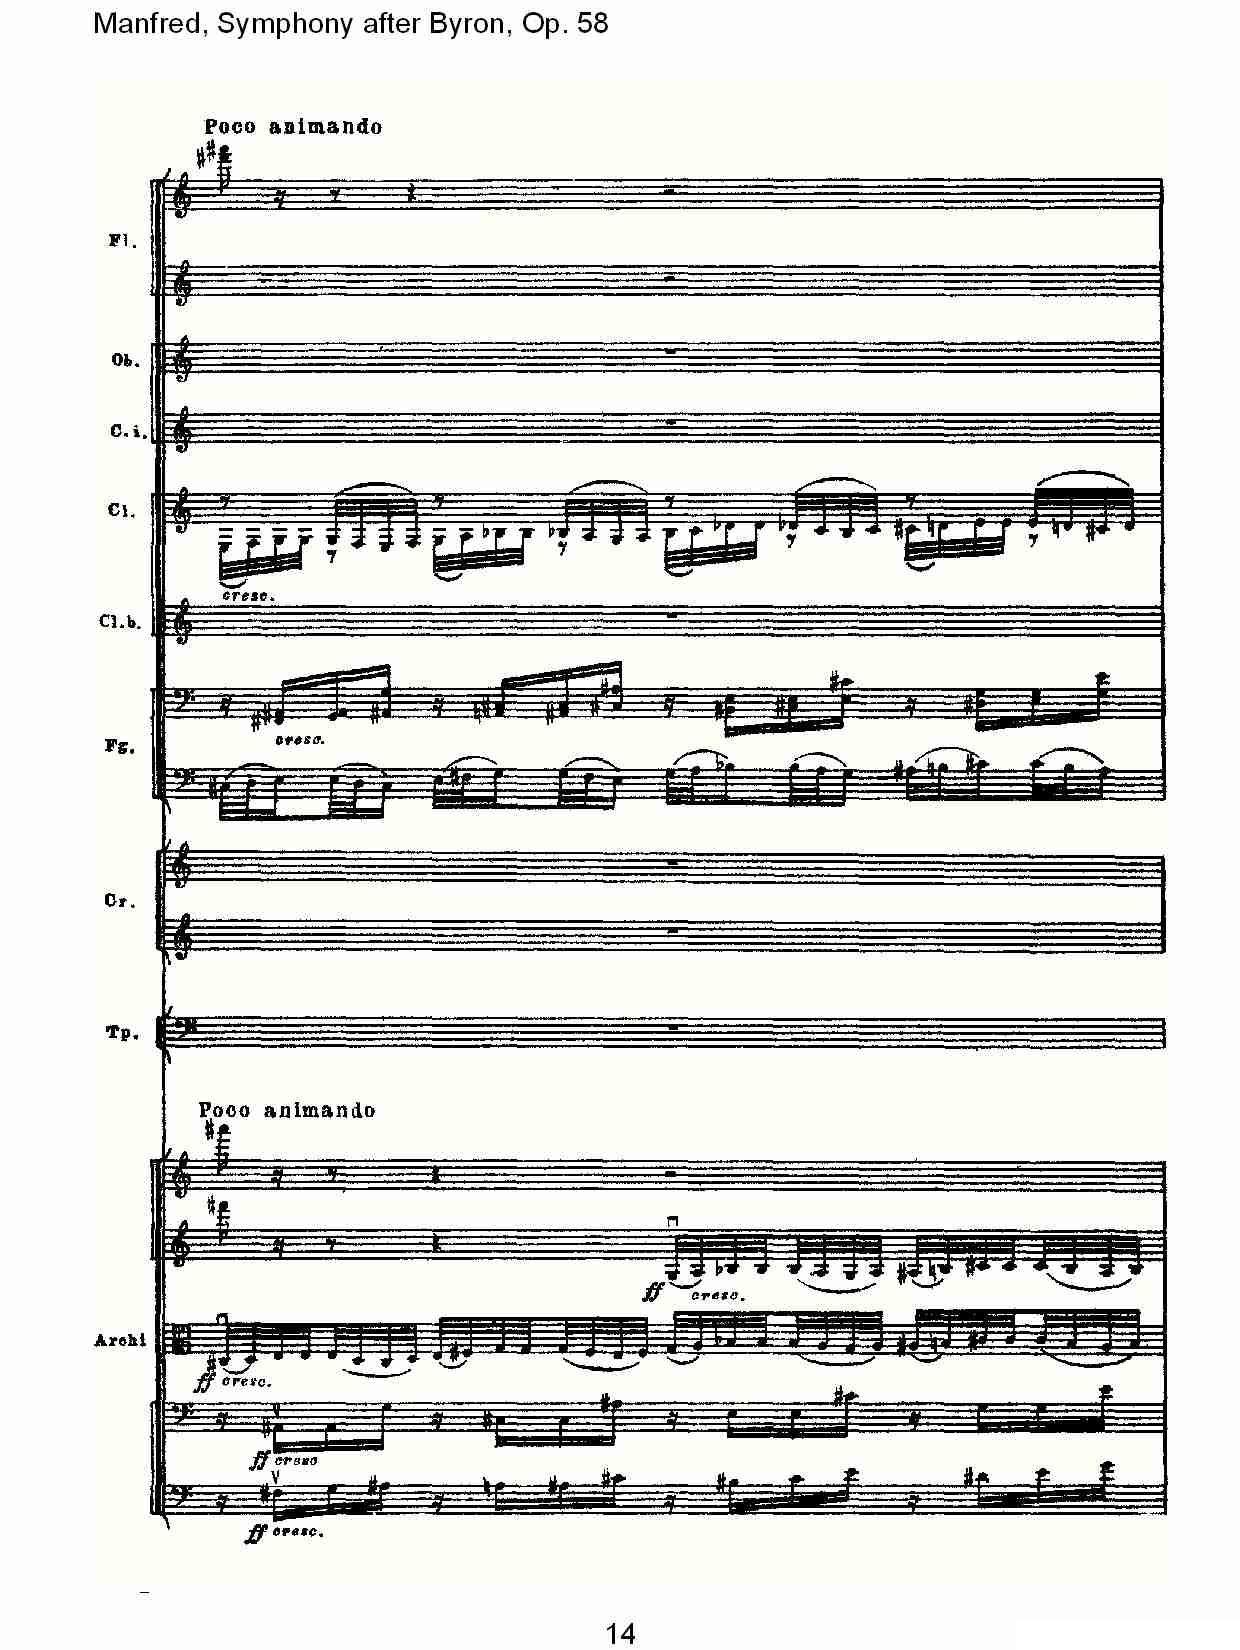 Manfred, Symphony after Byron, Op.58第一乐章（一）其它曲谱（图14）